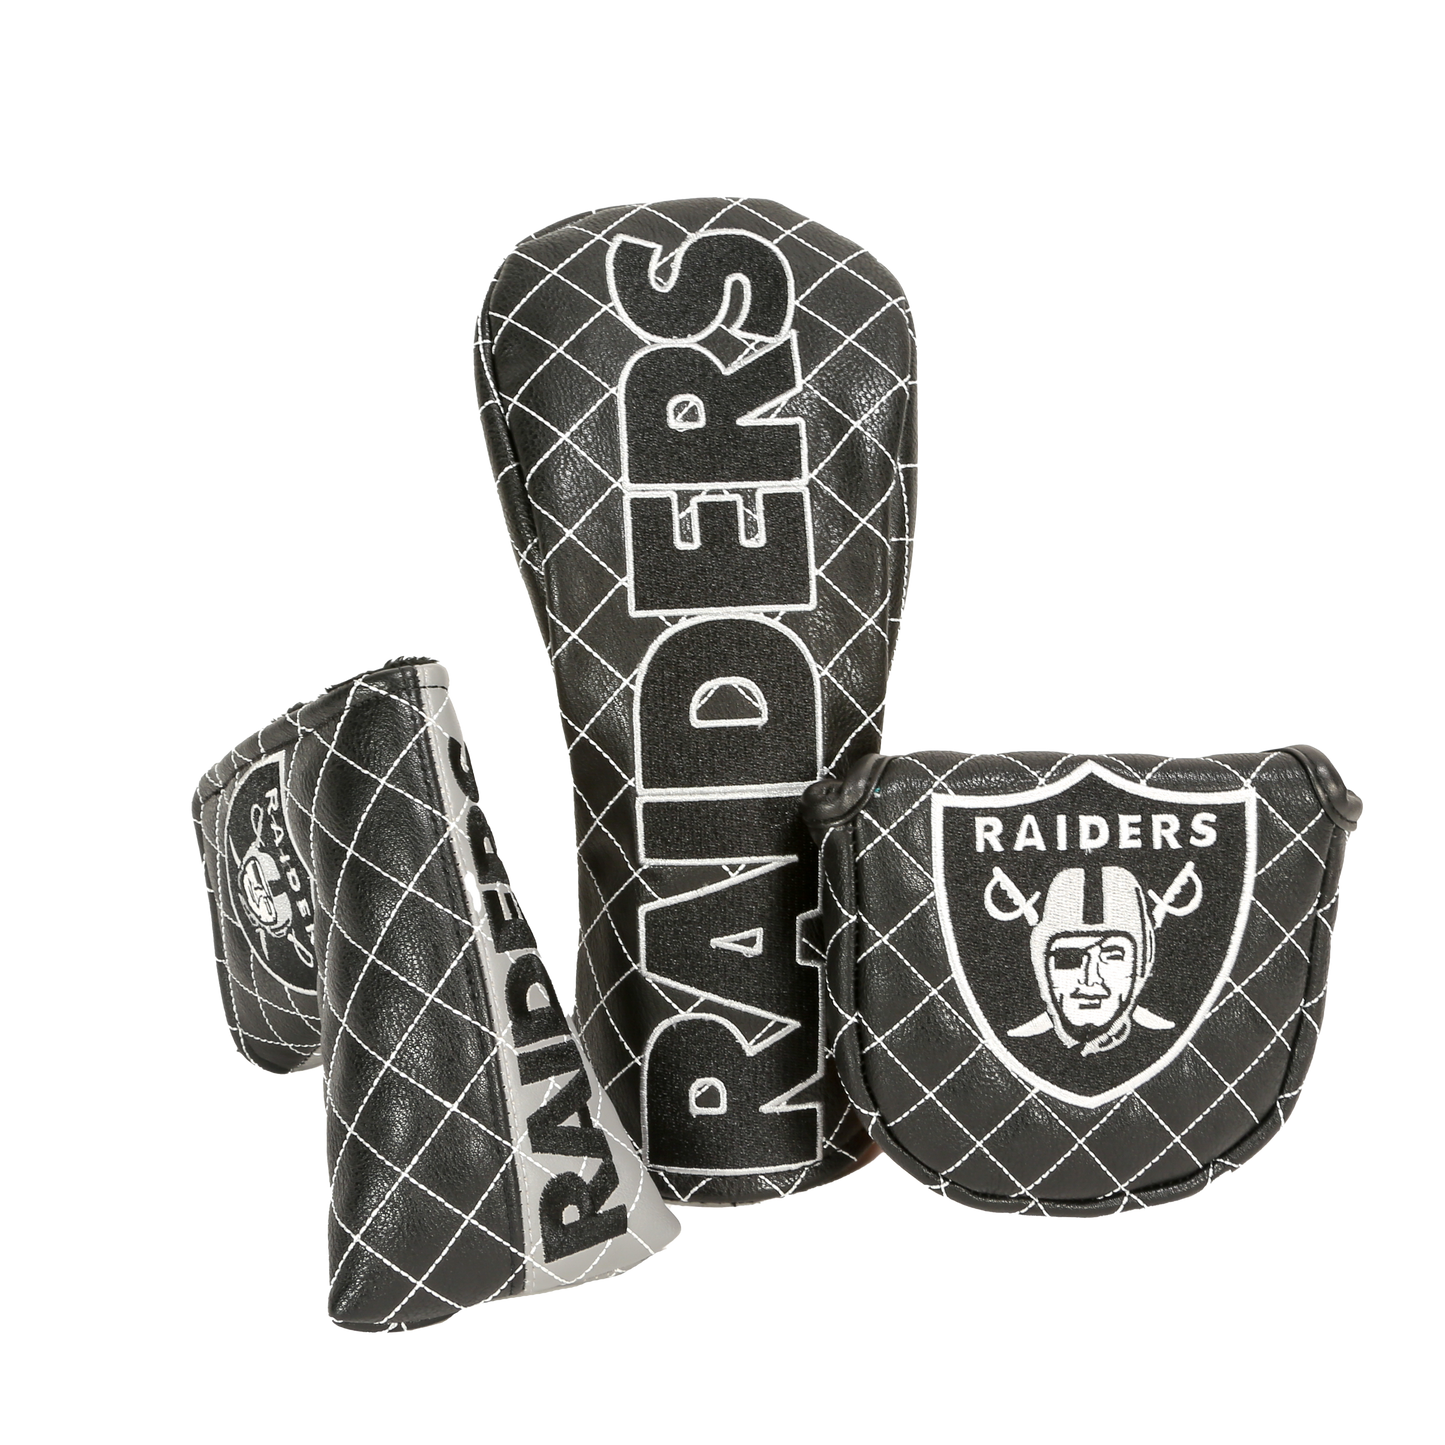 Las Vegas "Raiders" Blade Putter Cover